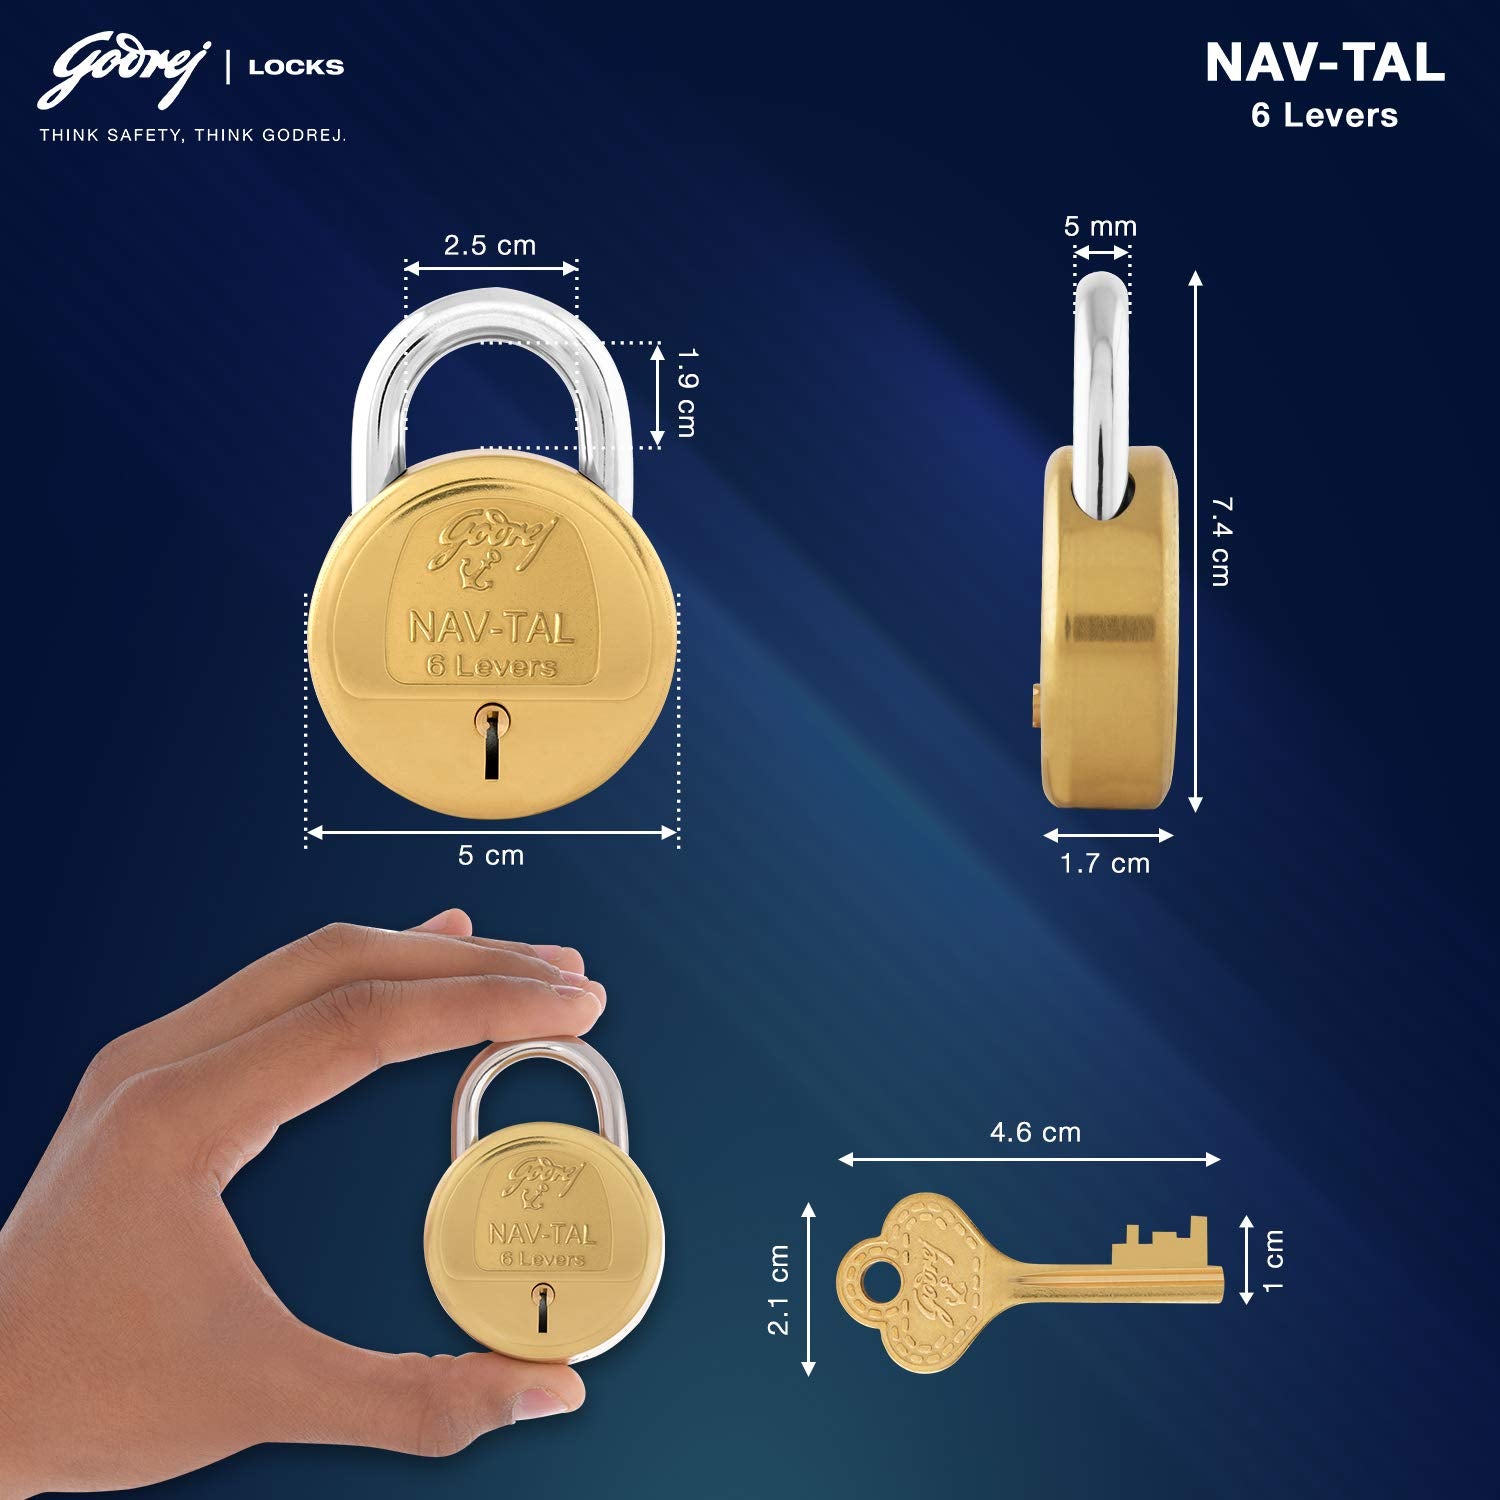 Godrej Locks Navtal 6 Levers Brass Lock with 3 Keys (Brown, Set of 1) Polished Finish